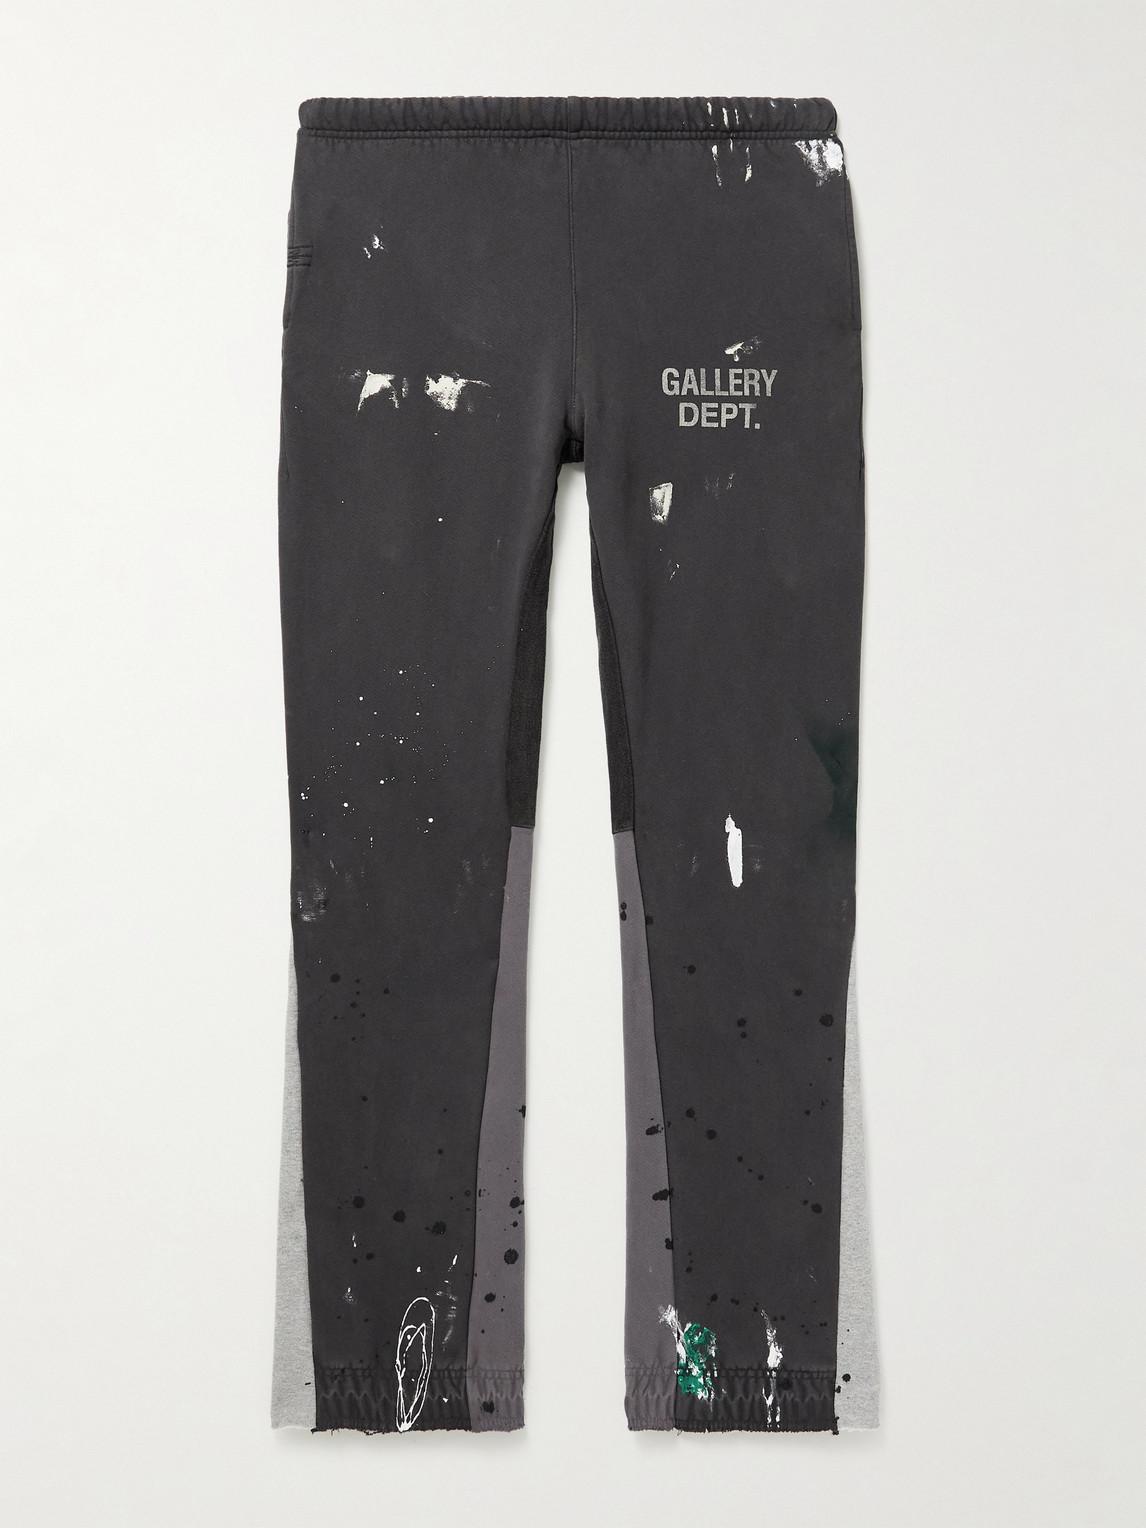 https://cdna.lystit.com/photos/mrporter/24ba1669/gallery-dept-Gray-Flared-Paint-splattered-Logo-print-Cotton-jersey-Sweatpants.jpeg